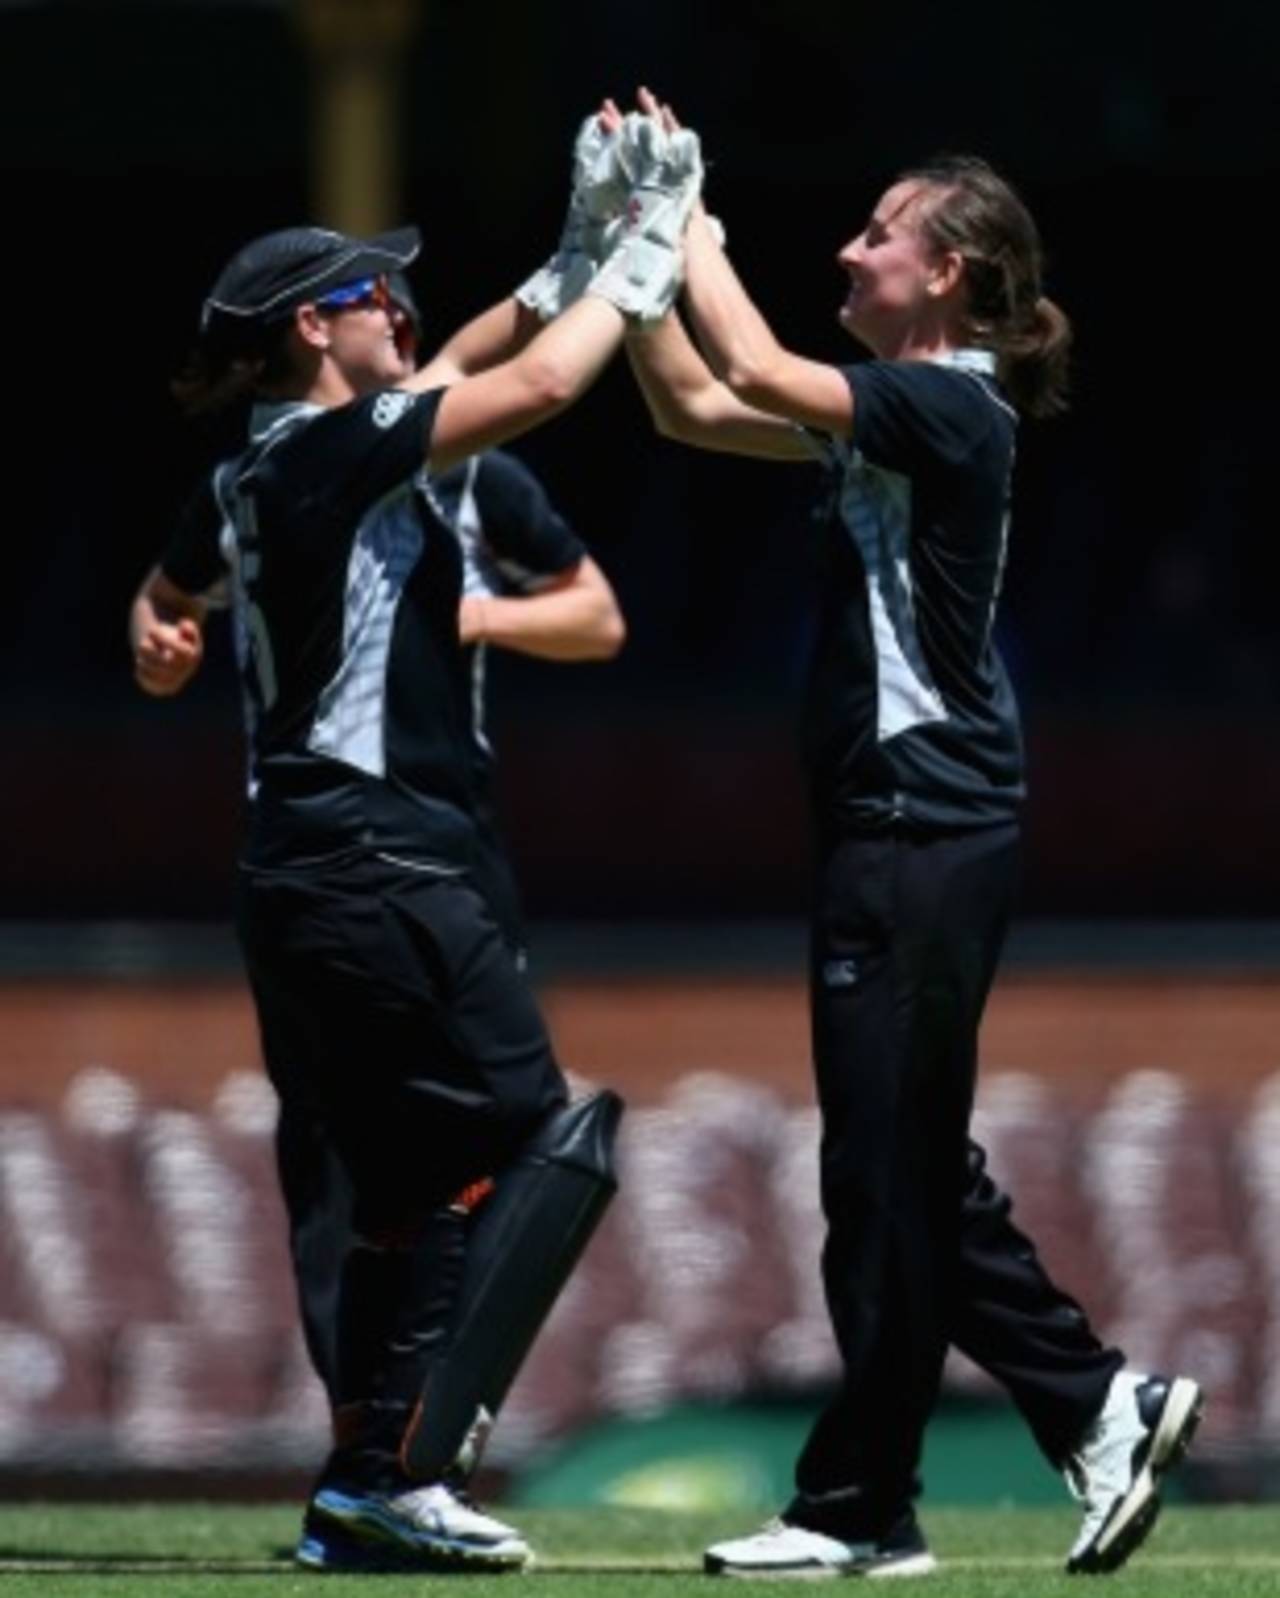 Rachel Candy picked up four wickets, Australia v New Zealand, 1st Women's ODI, Sydney, December 12, 2011